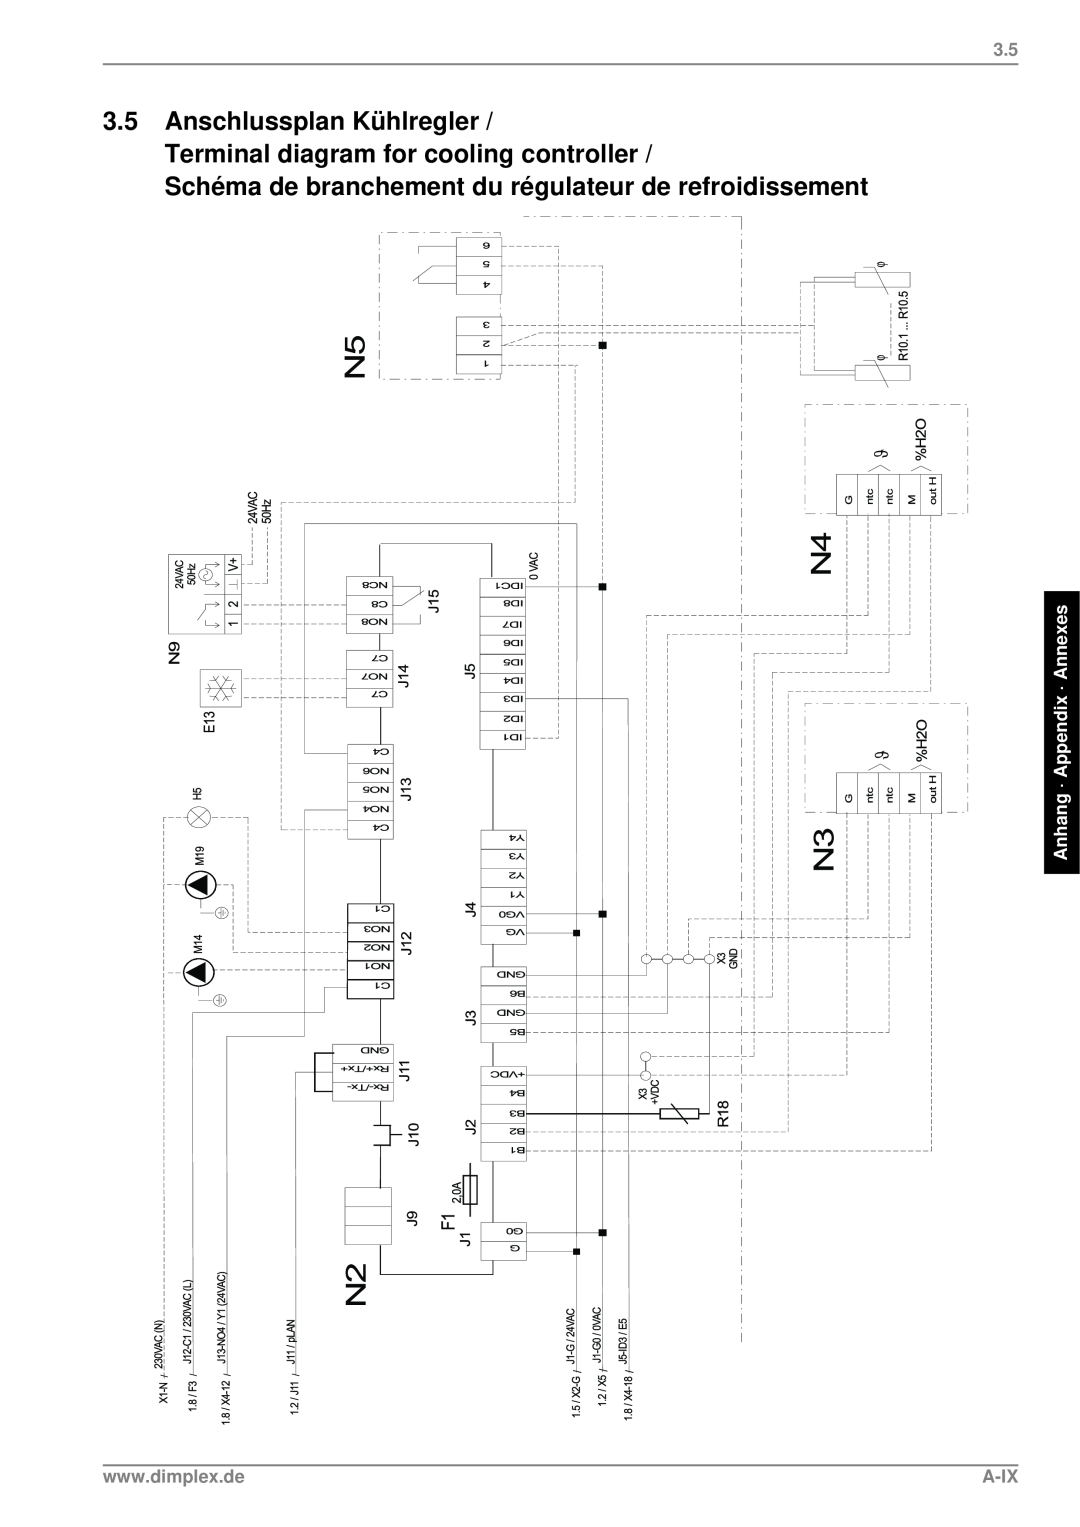 Dimplex SI 75ZSR 3.5Anschlussplan Kühlregler, Terminal diagram for cooling controller, Anhang · Appendix · Annexes, A-Ix 